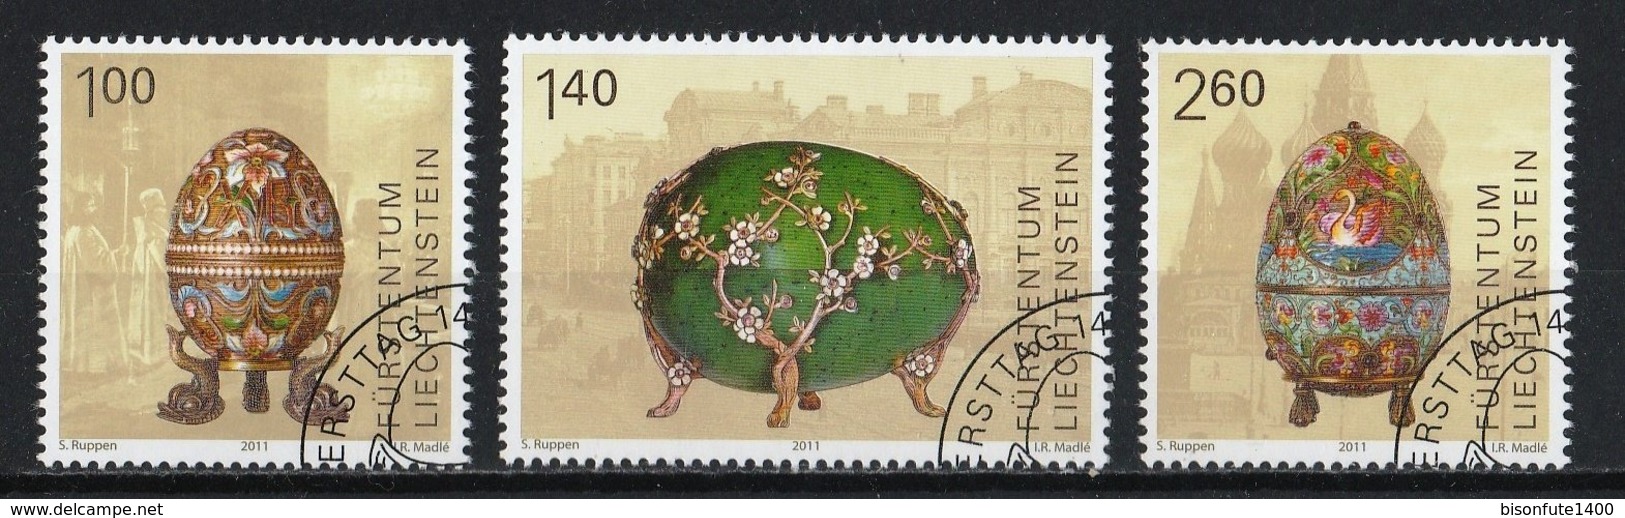 Liechtenstein 2011 : Timbres Yvert & Tellier N° 1529 - 1530 Et 1531 Avec Oblit. Rondes. - Used Stamps